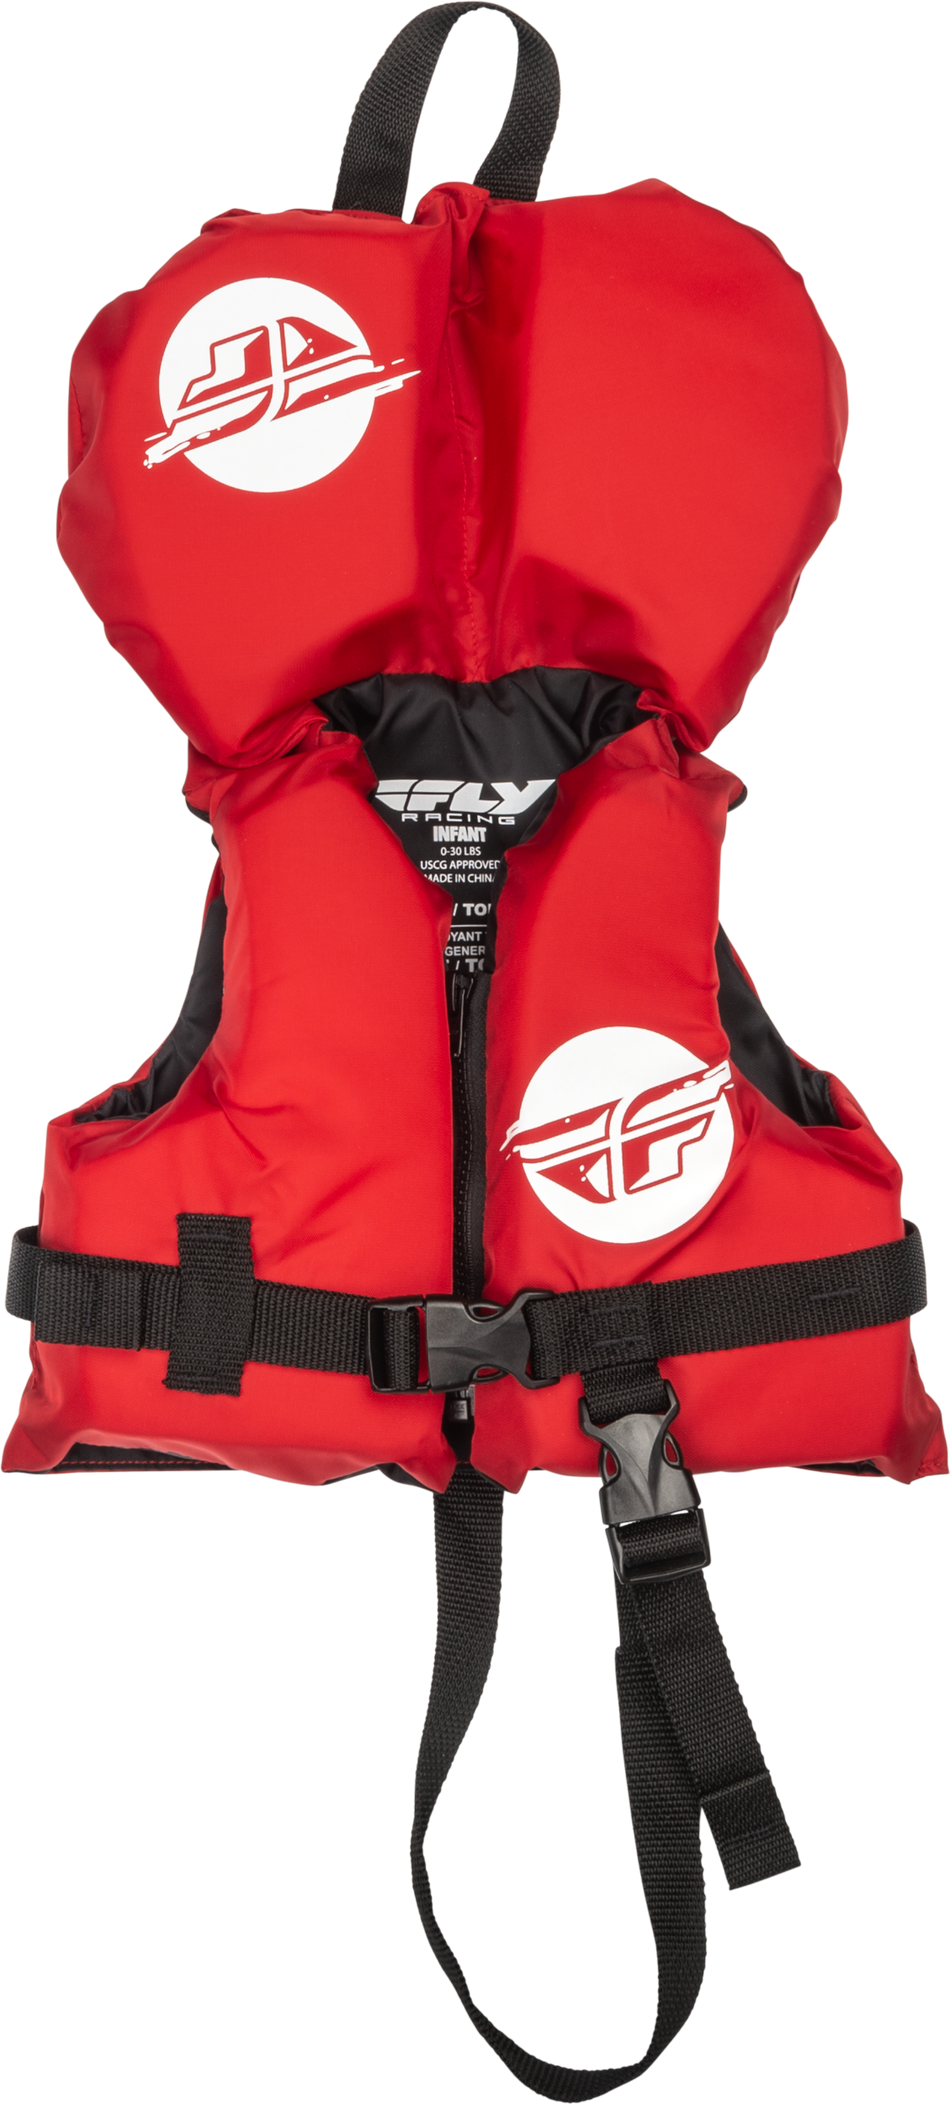 FLY RACING Infant Flotation Vest Red/White 221-30310